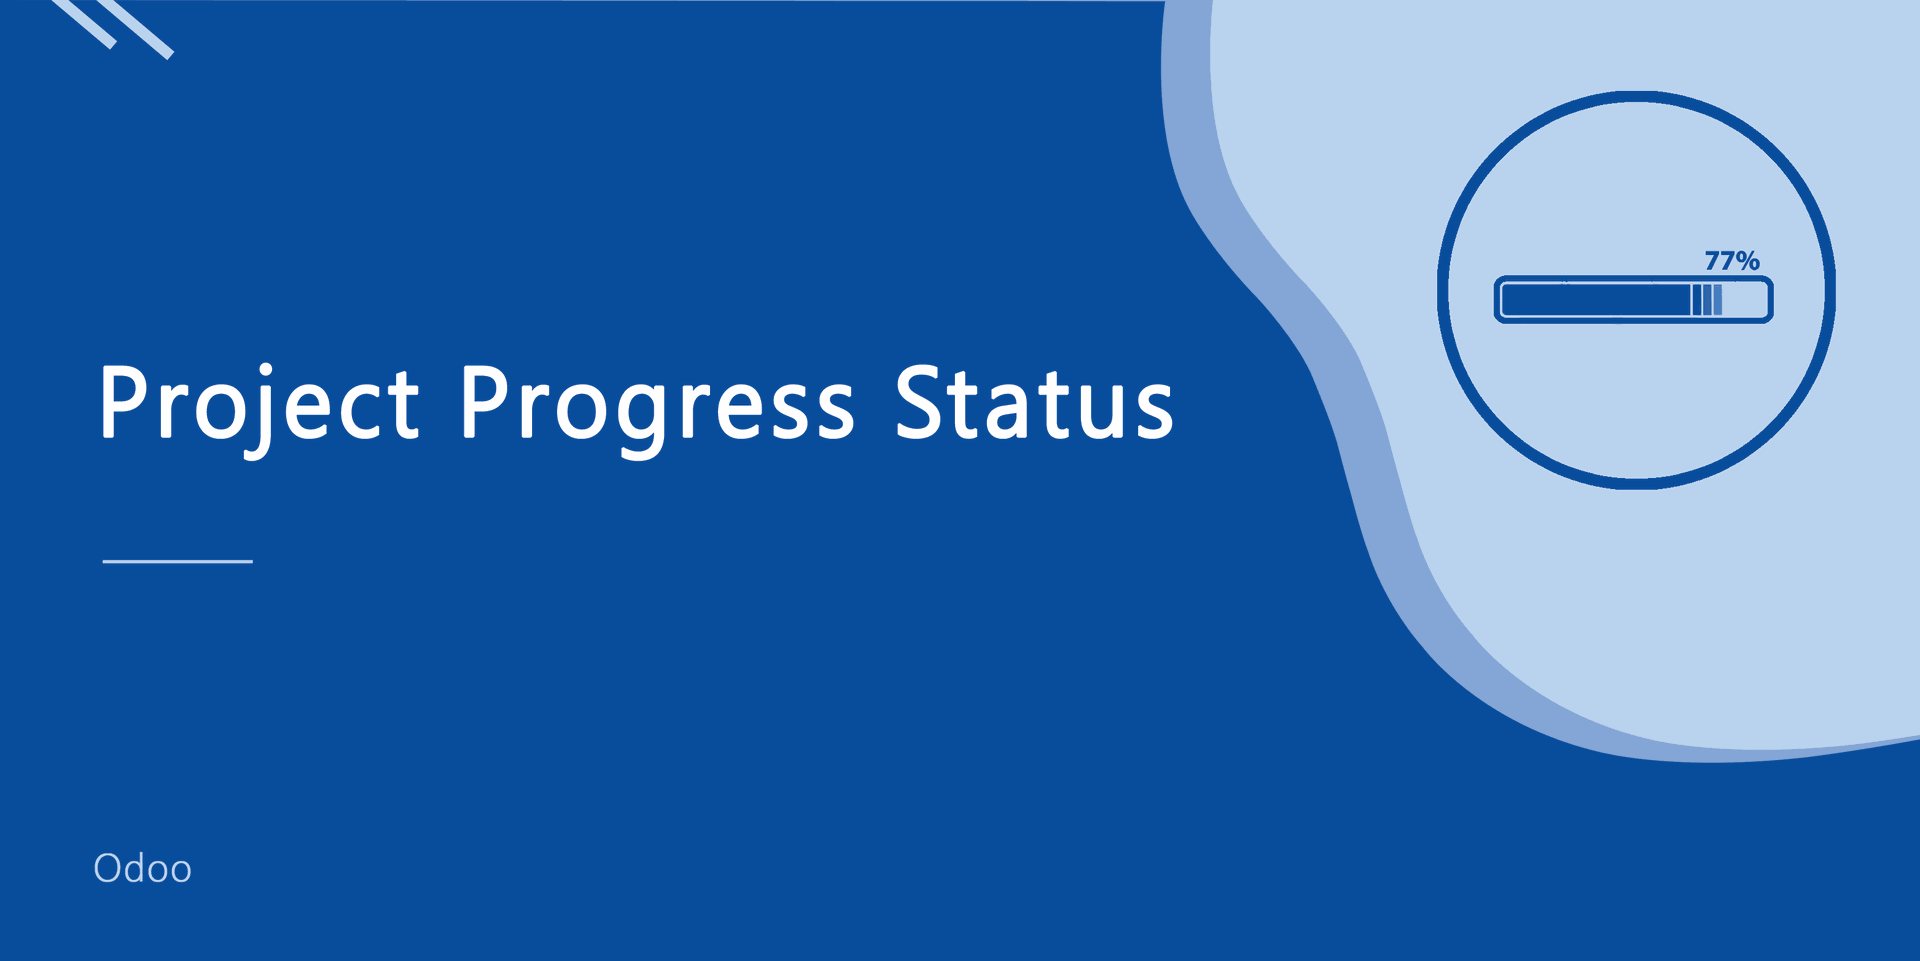 Project Progress Status
